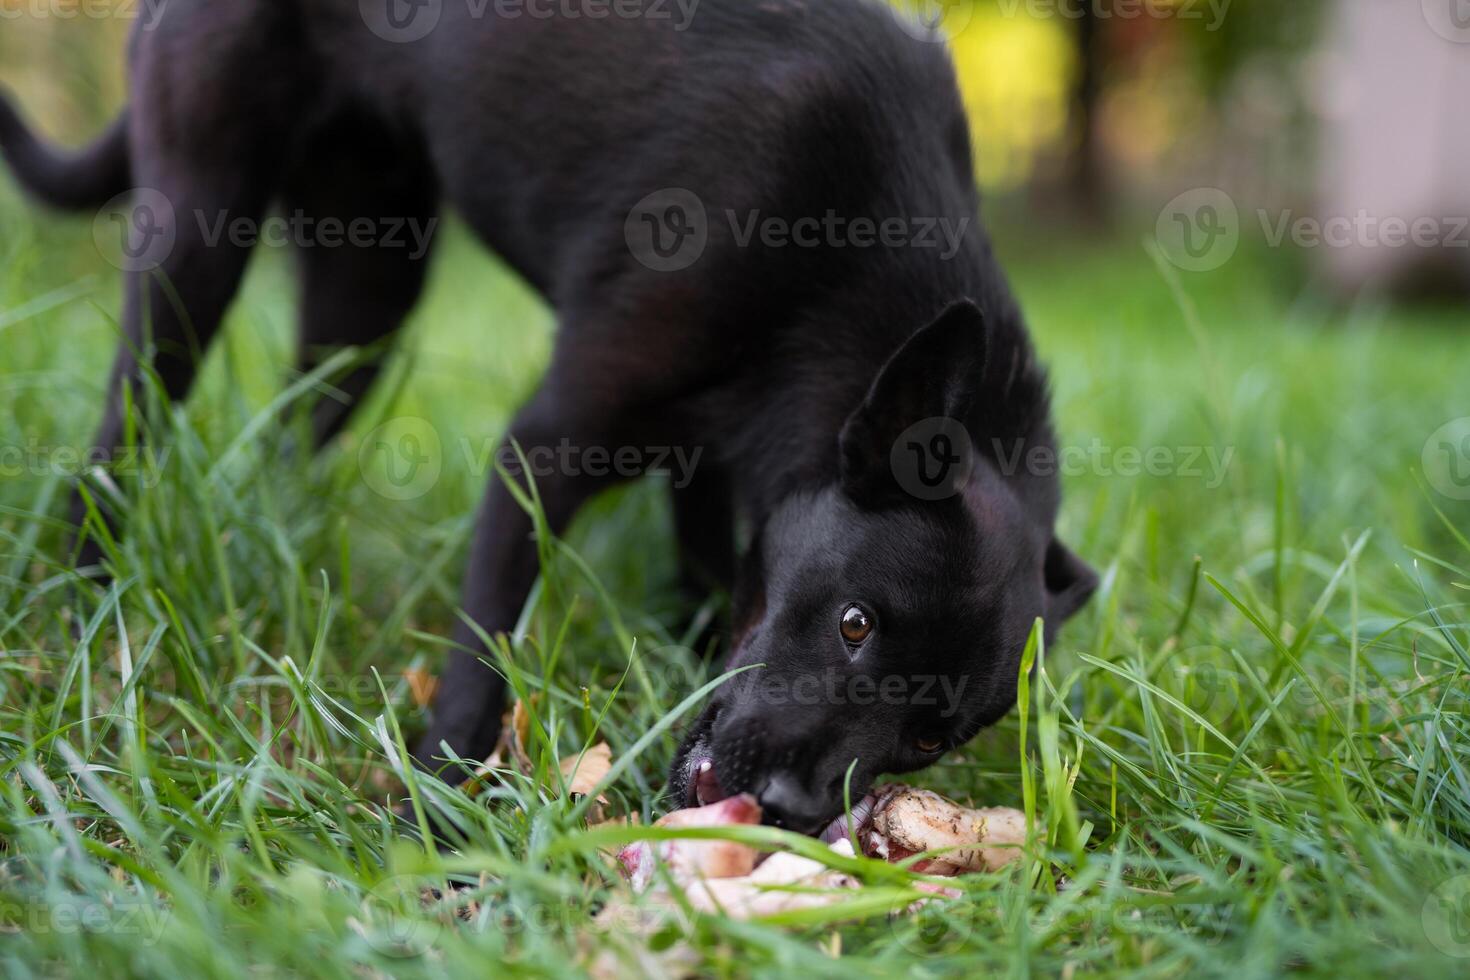 negro joven perro come hueso en el césped al aire libre foto